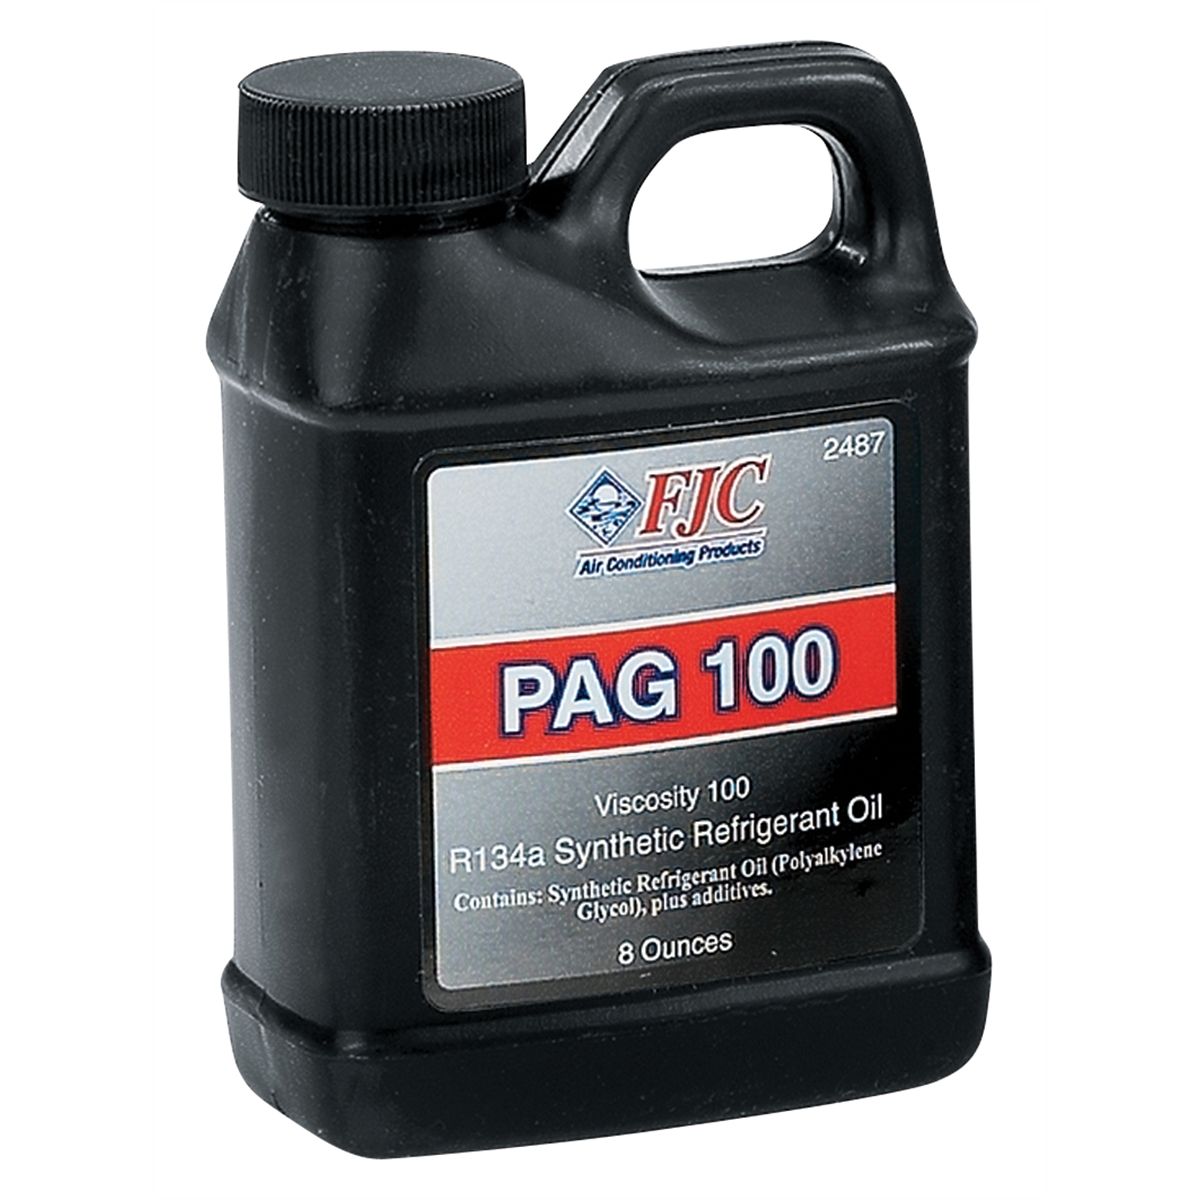 PAG OIL 100-8OZ